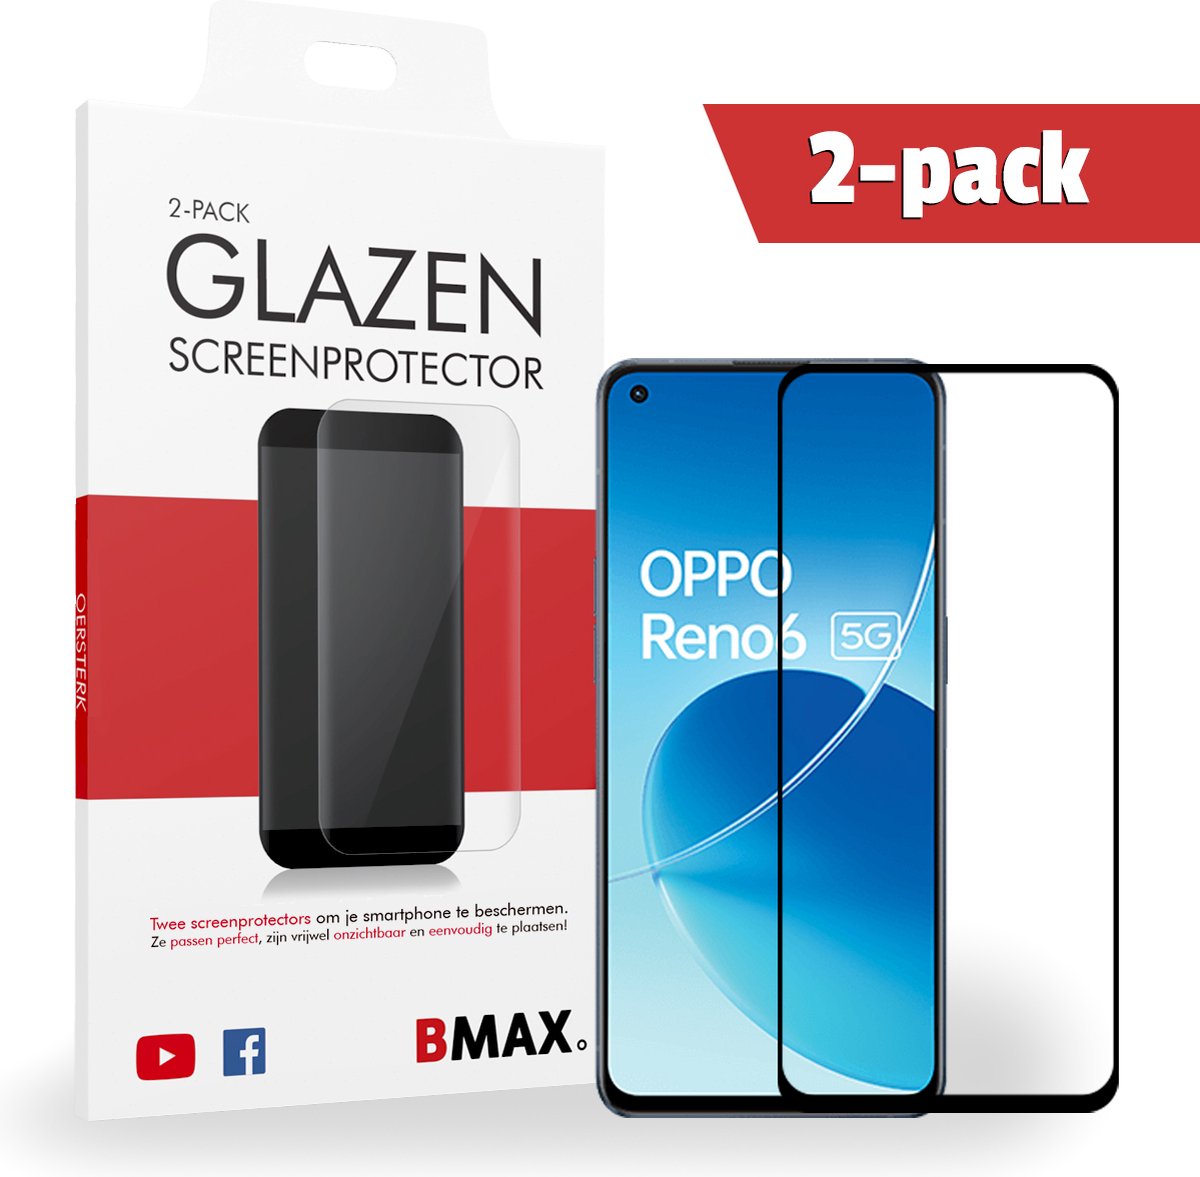 2-pack Bmax Oppo Reno 6 Screenprotector - Glass - Full Cover 2.5d - Black